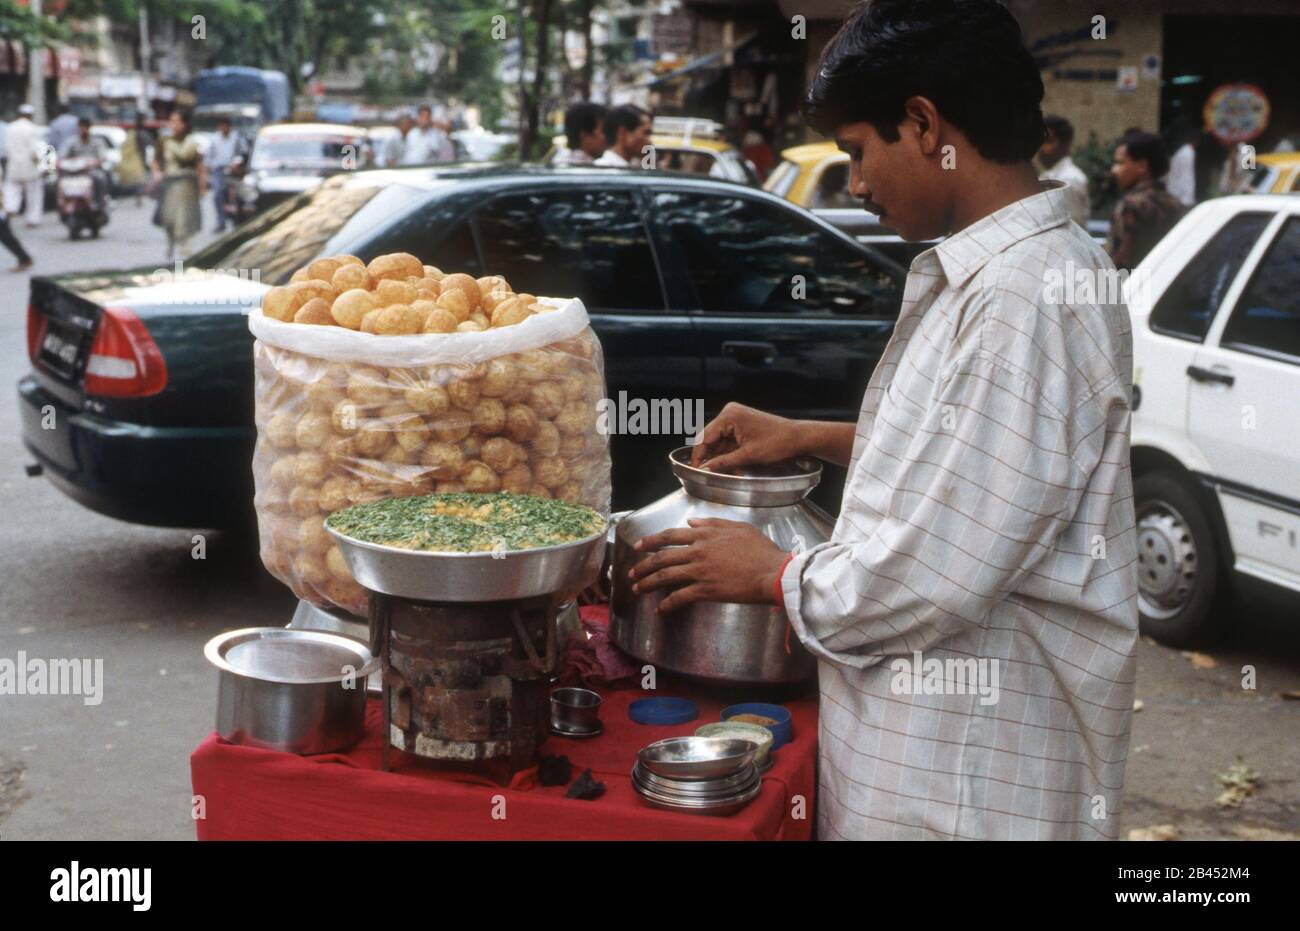 pani puri stall on road, India, Asia Stock Photo